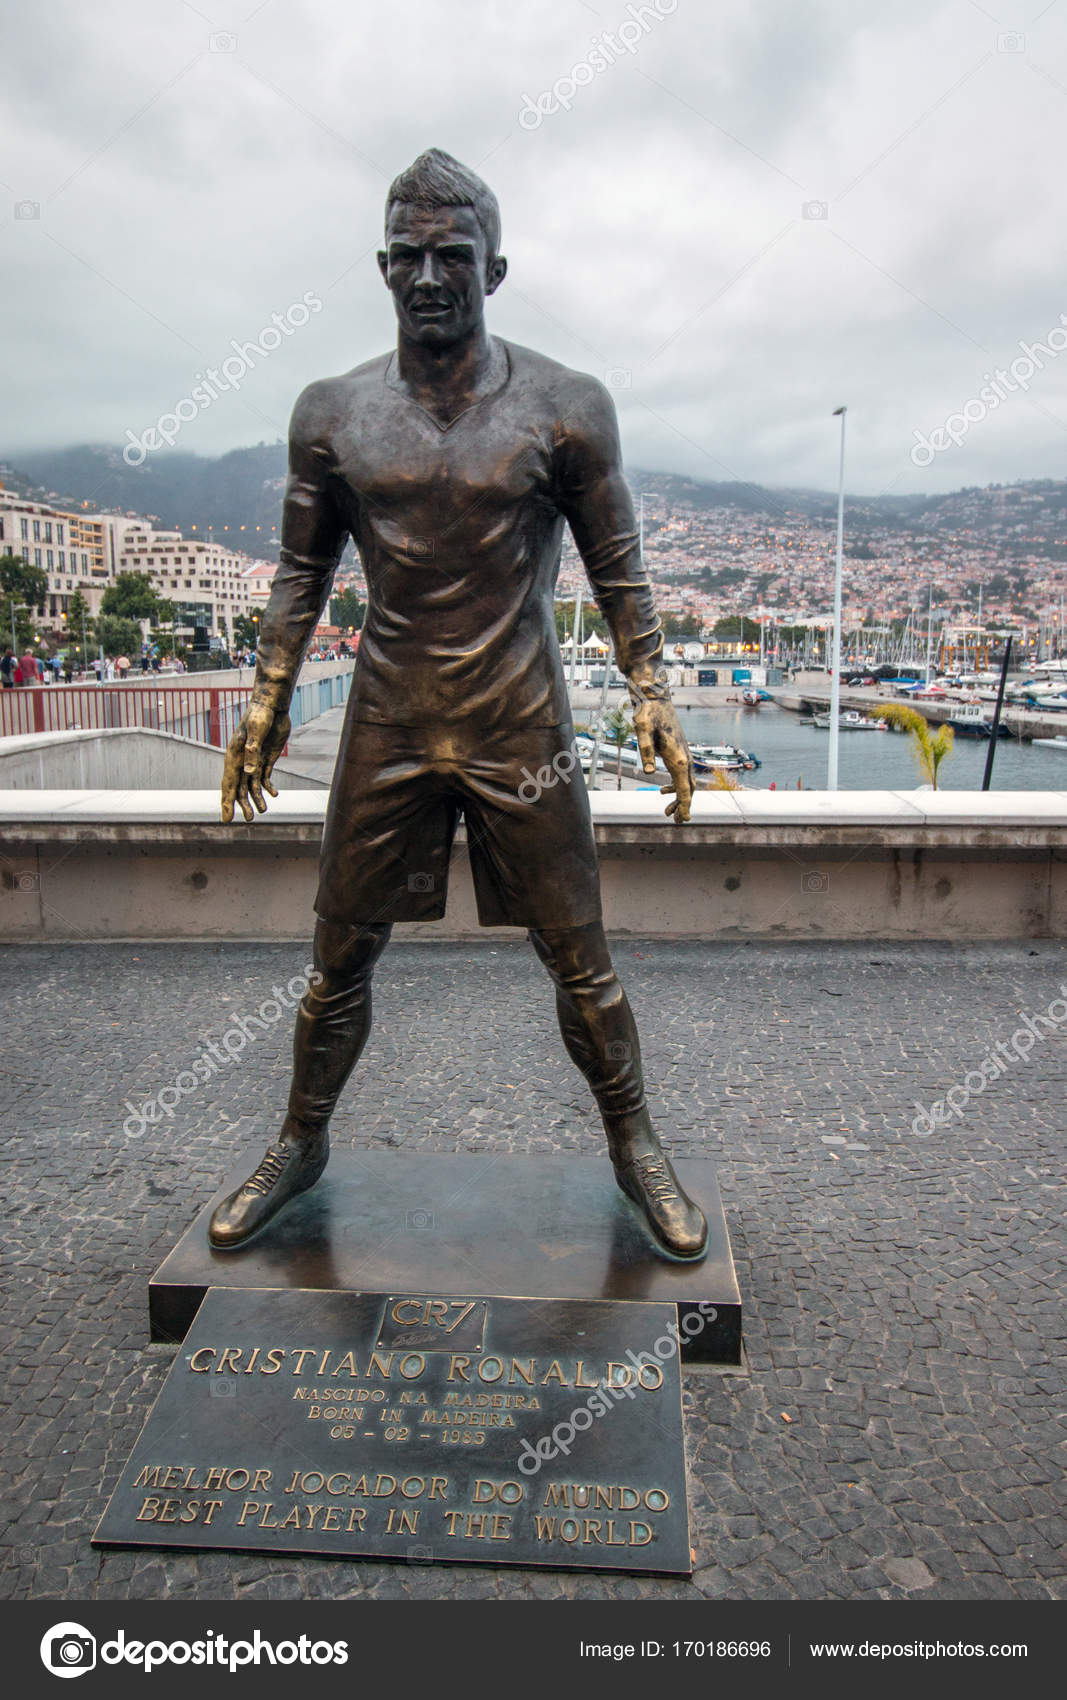 Cristiano Ronaldo Statue - Emile Joubert On Twitter It Is Real